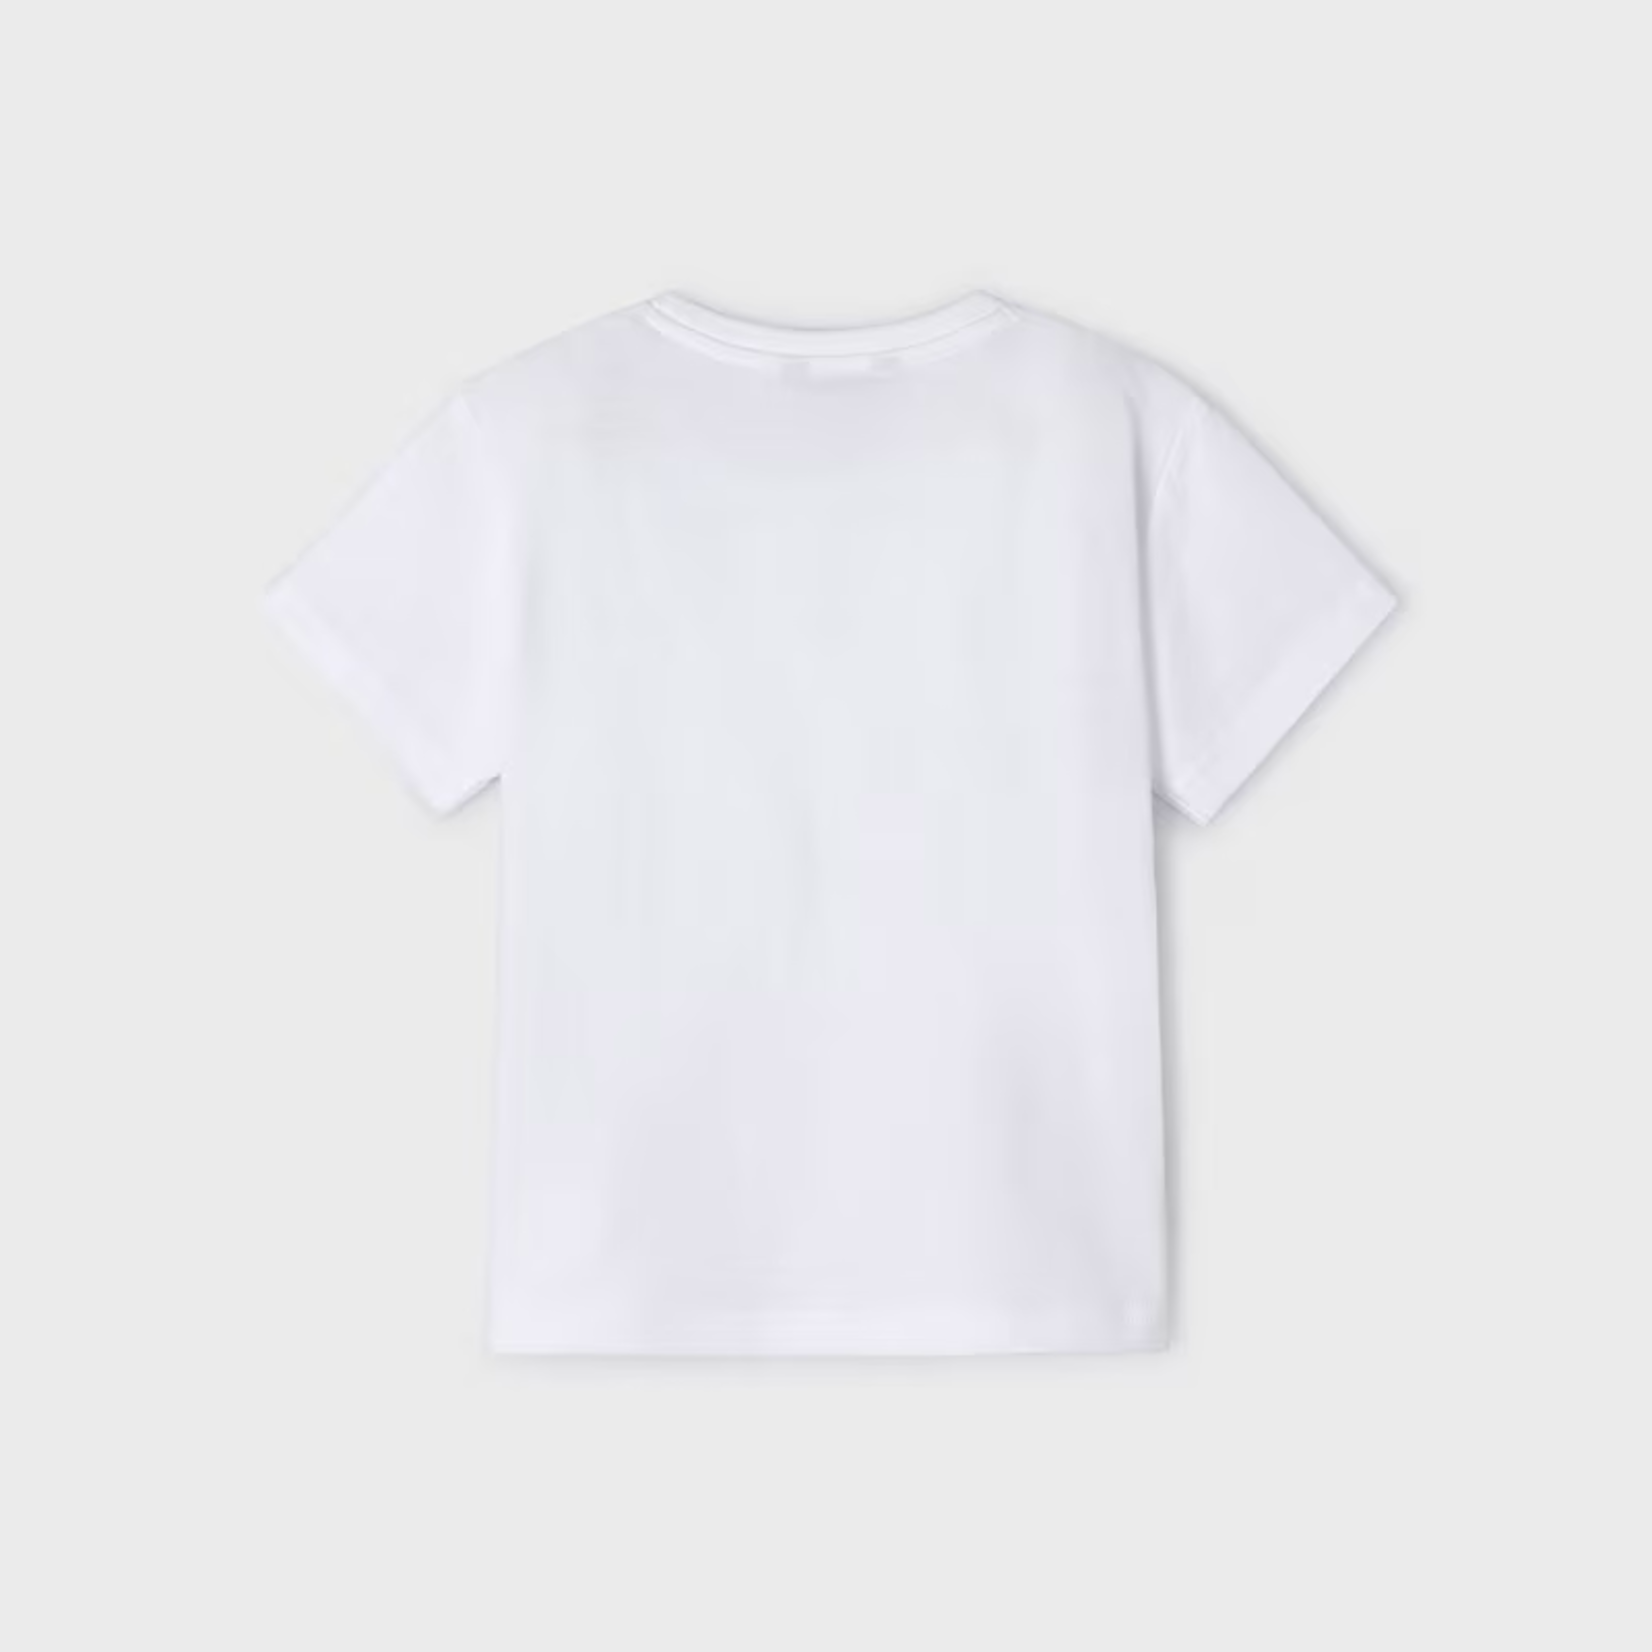 Mayoral Mayoral S/S Shirt Retro Graphic White